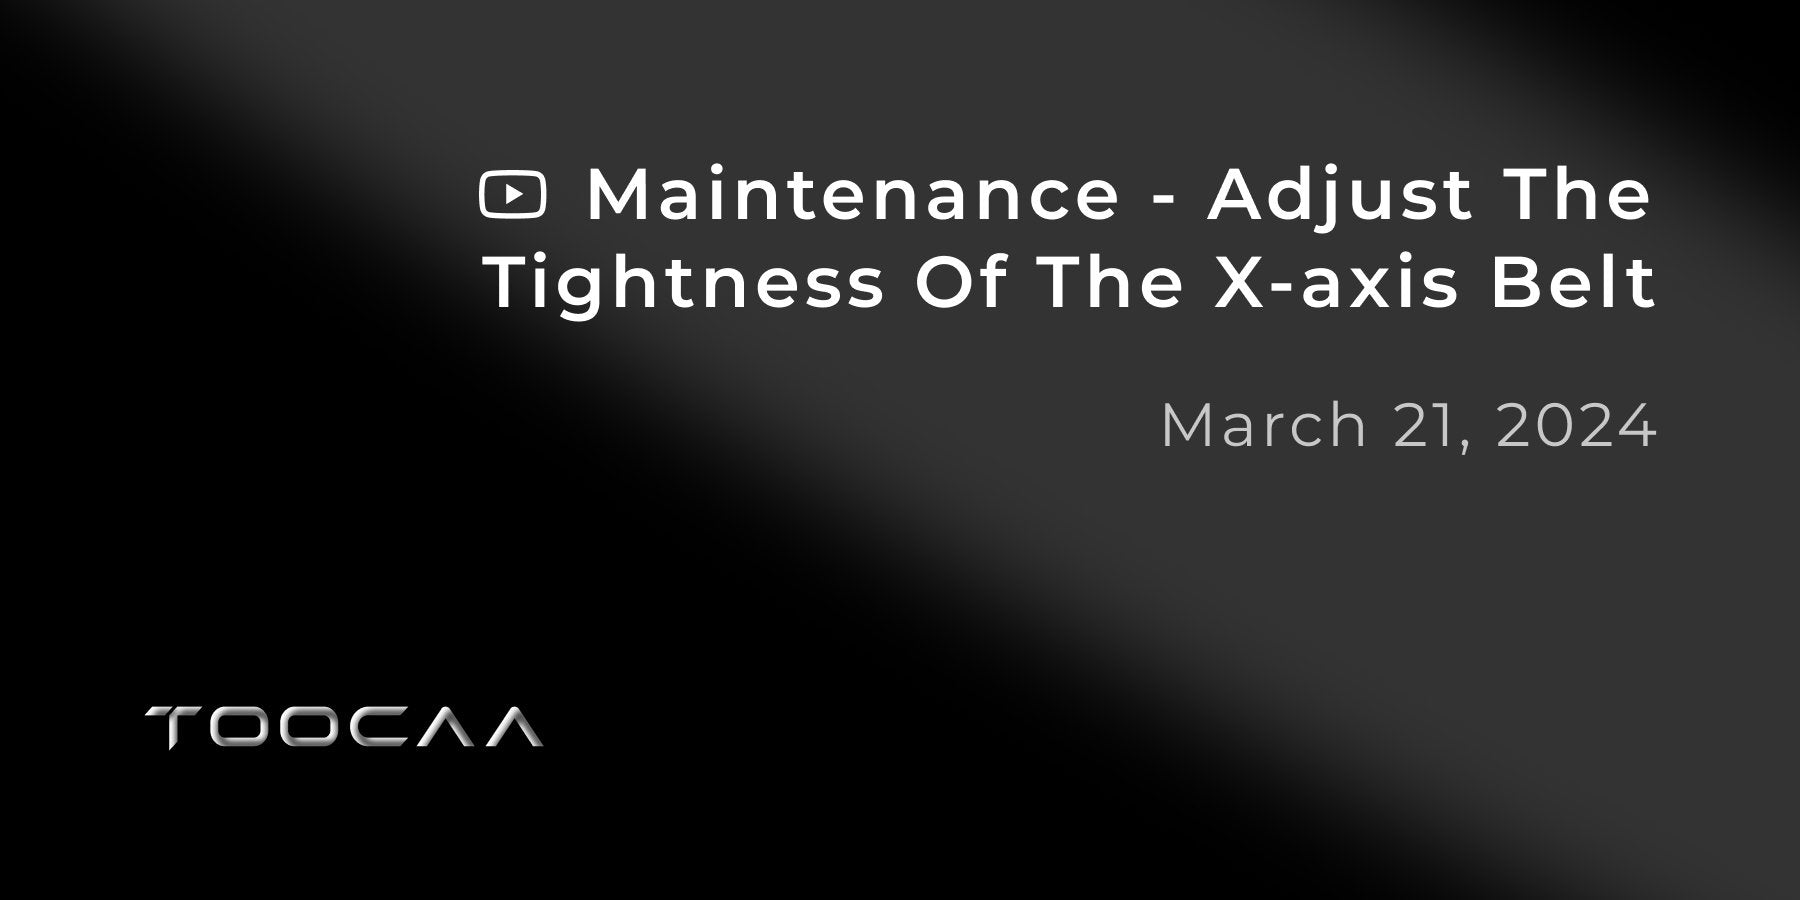 Maintenance - Adjust The Tightness Of The X-axis Belt